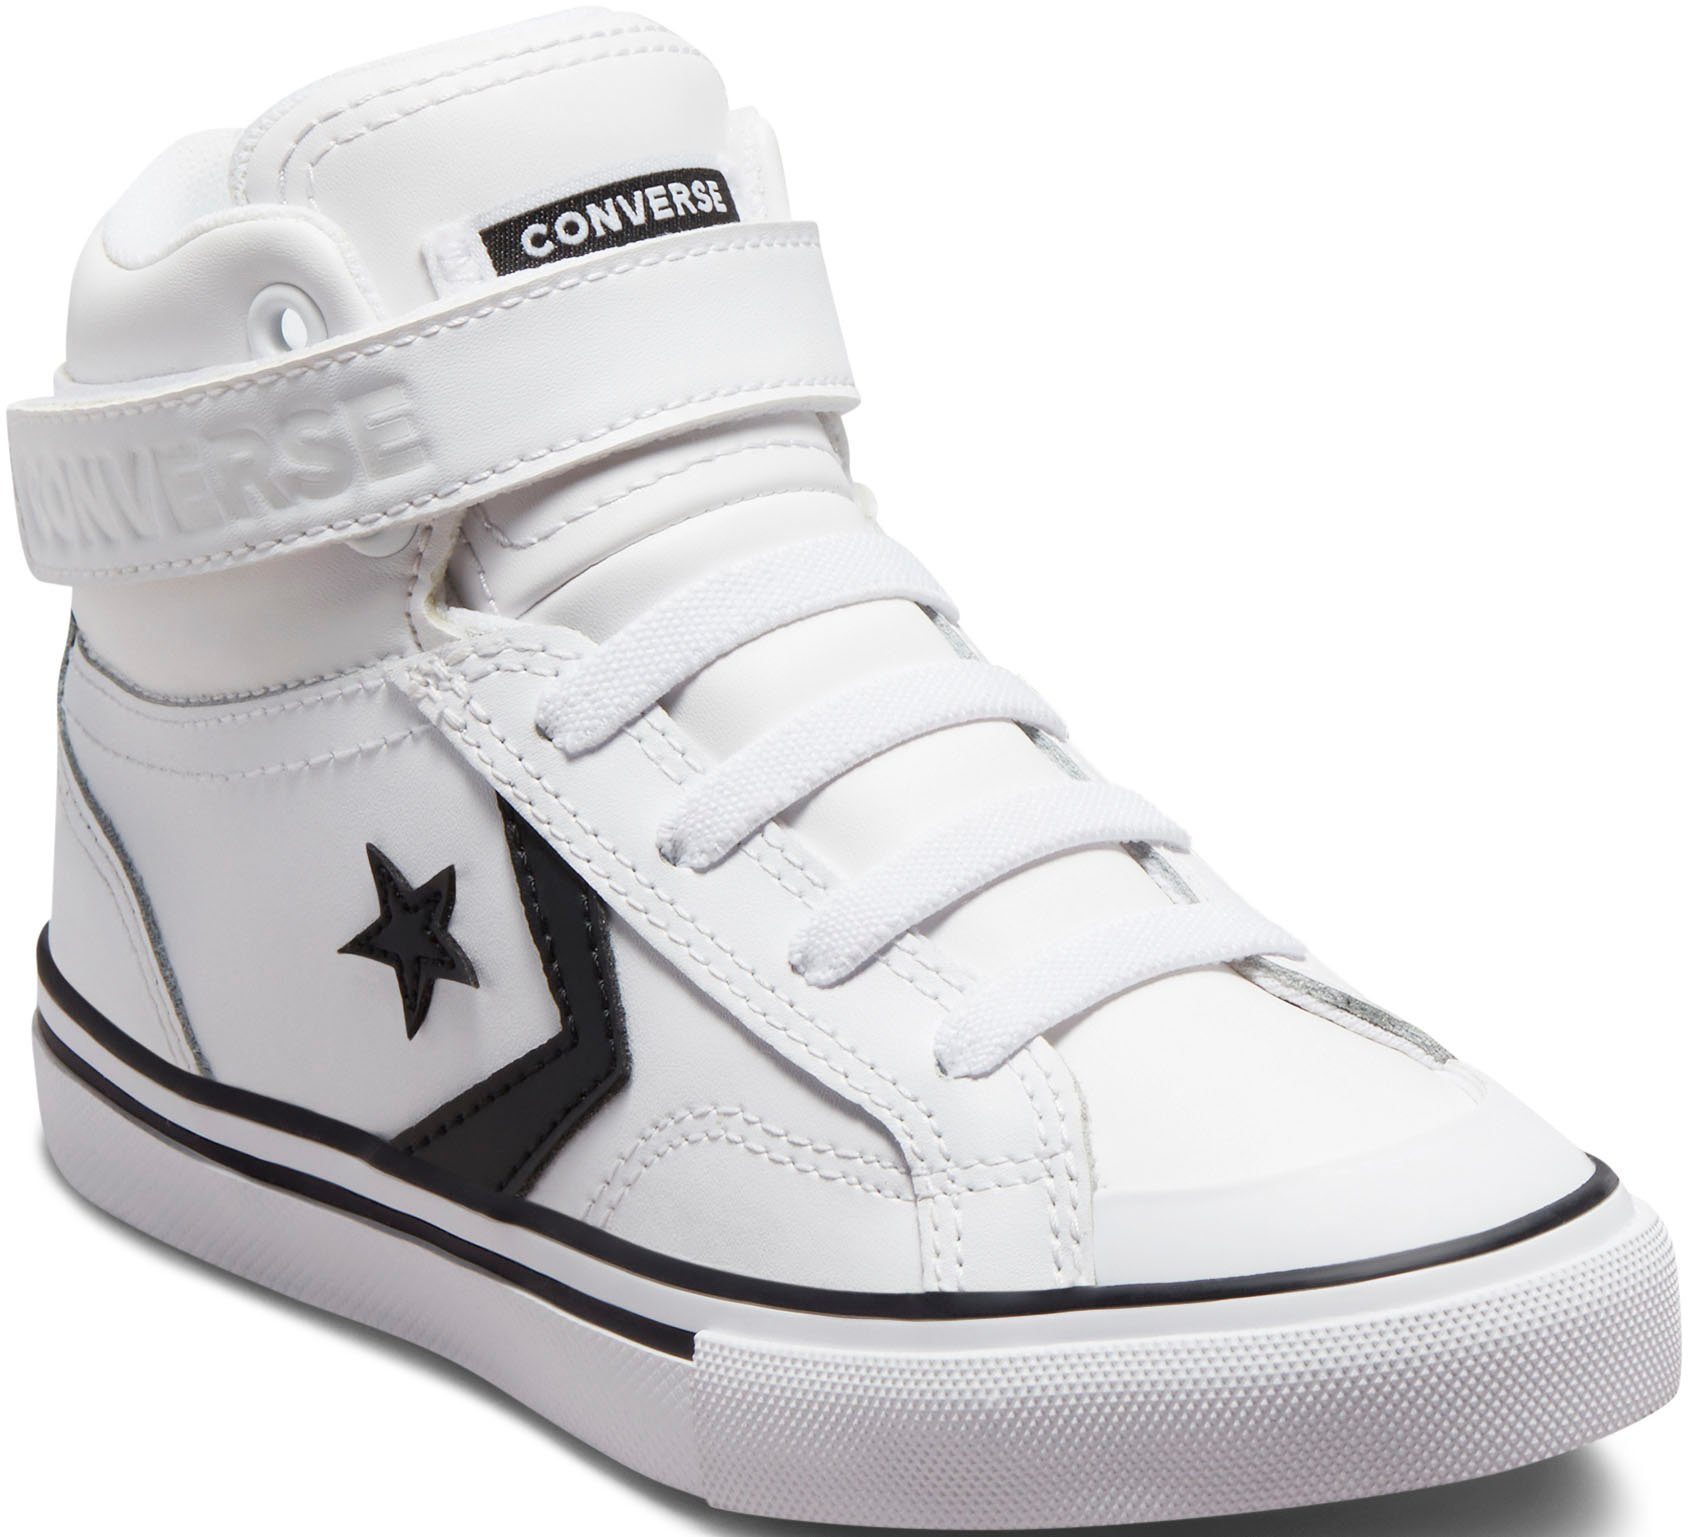 BLAZE STRAP PRO Converse LEATHER weiß-schwarz Sneaker